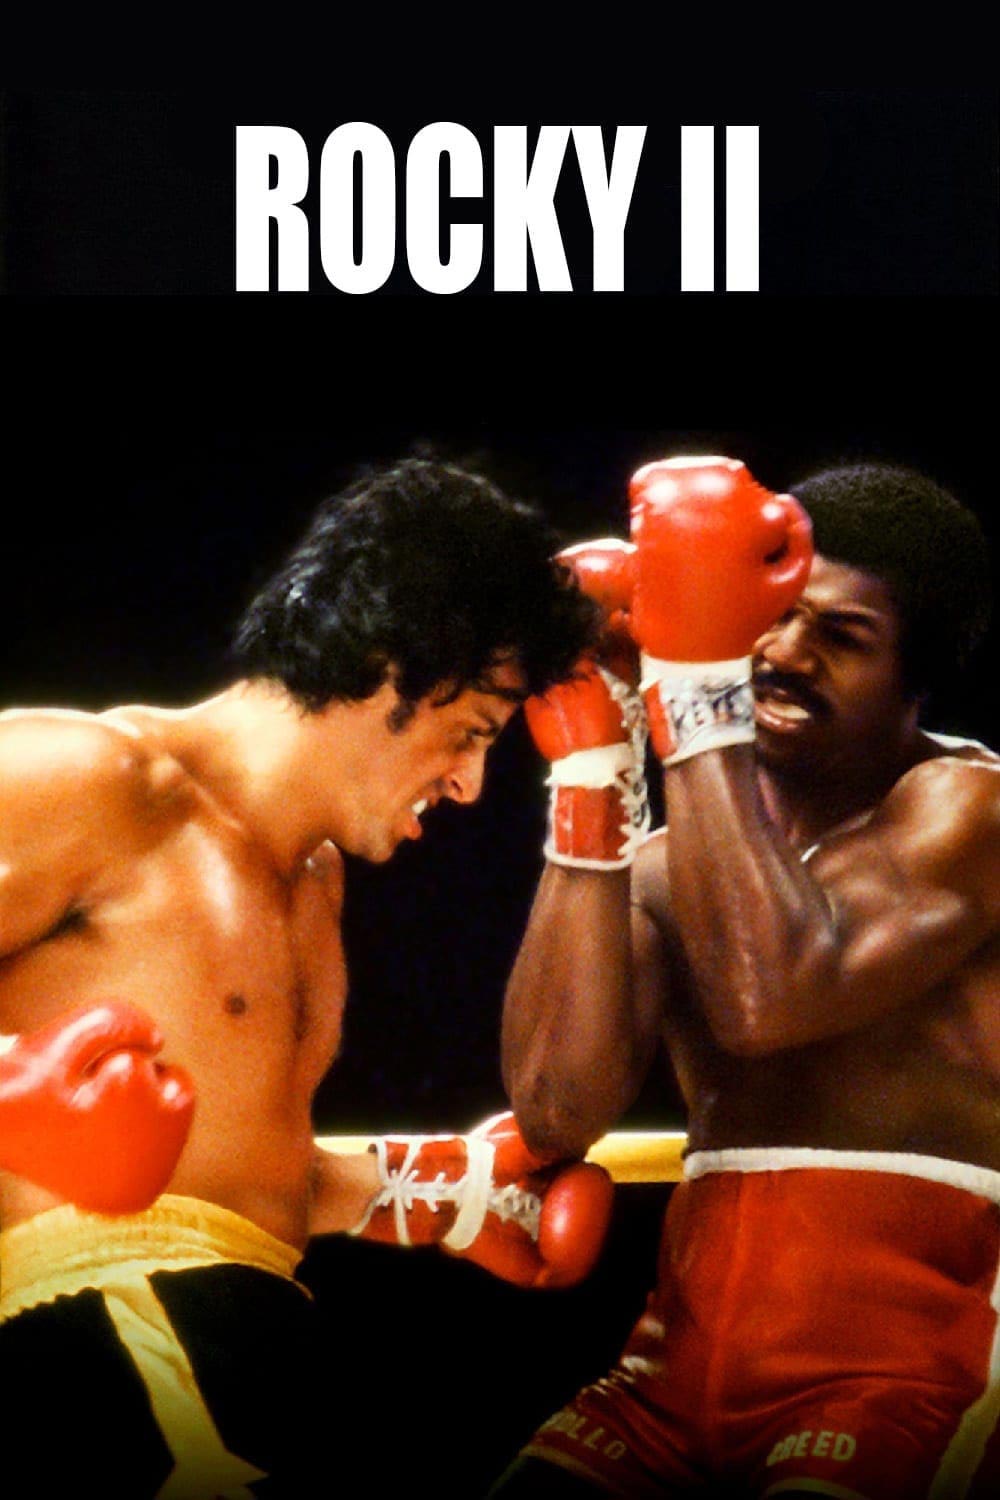 Rocky II Poster